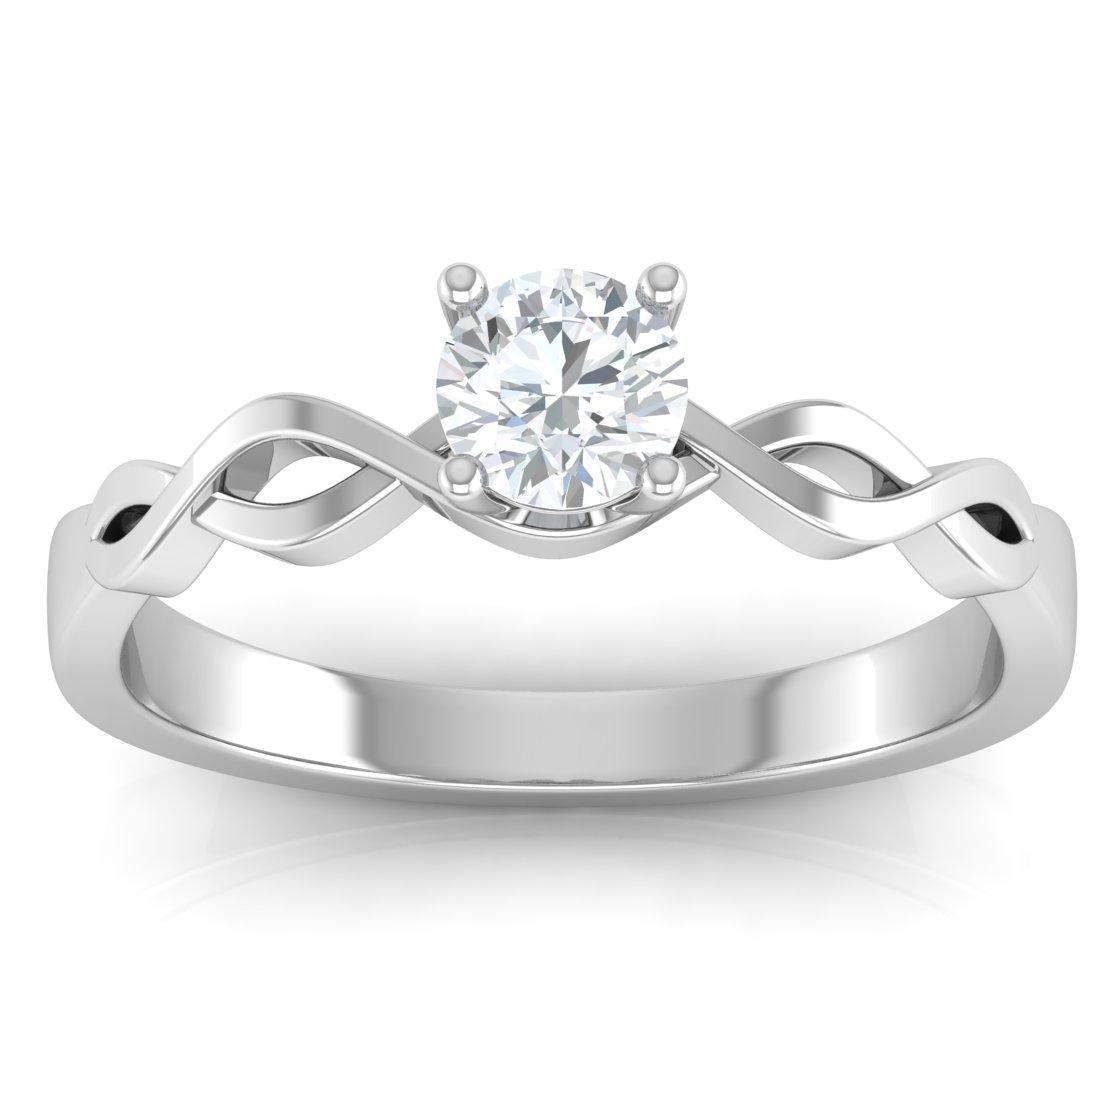 5 Must-Have Diamond Jewellery Pieces | Solitaire diamond ring